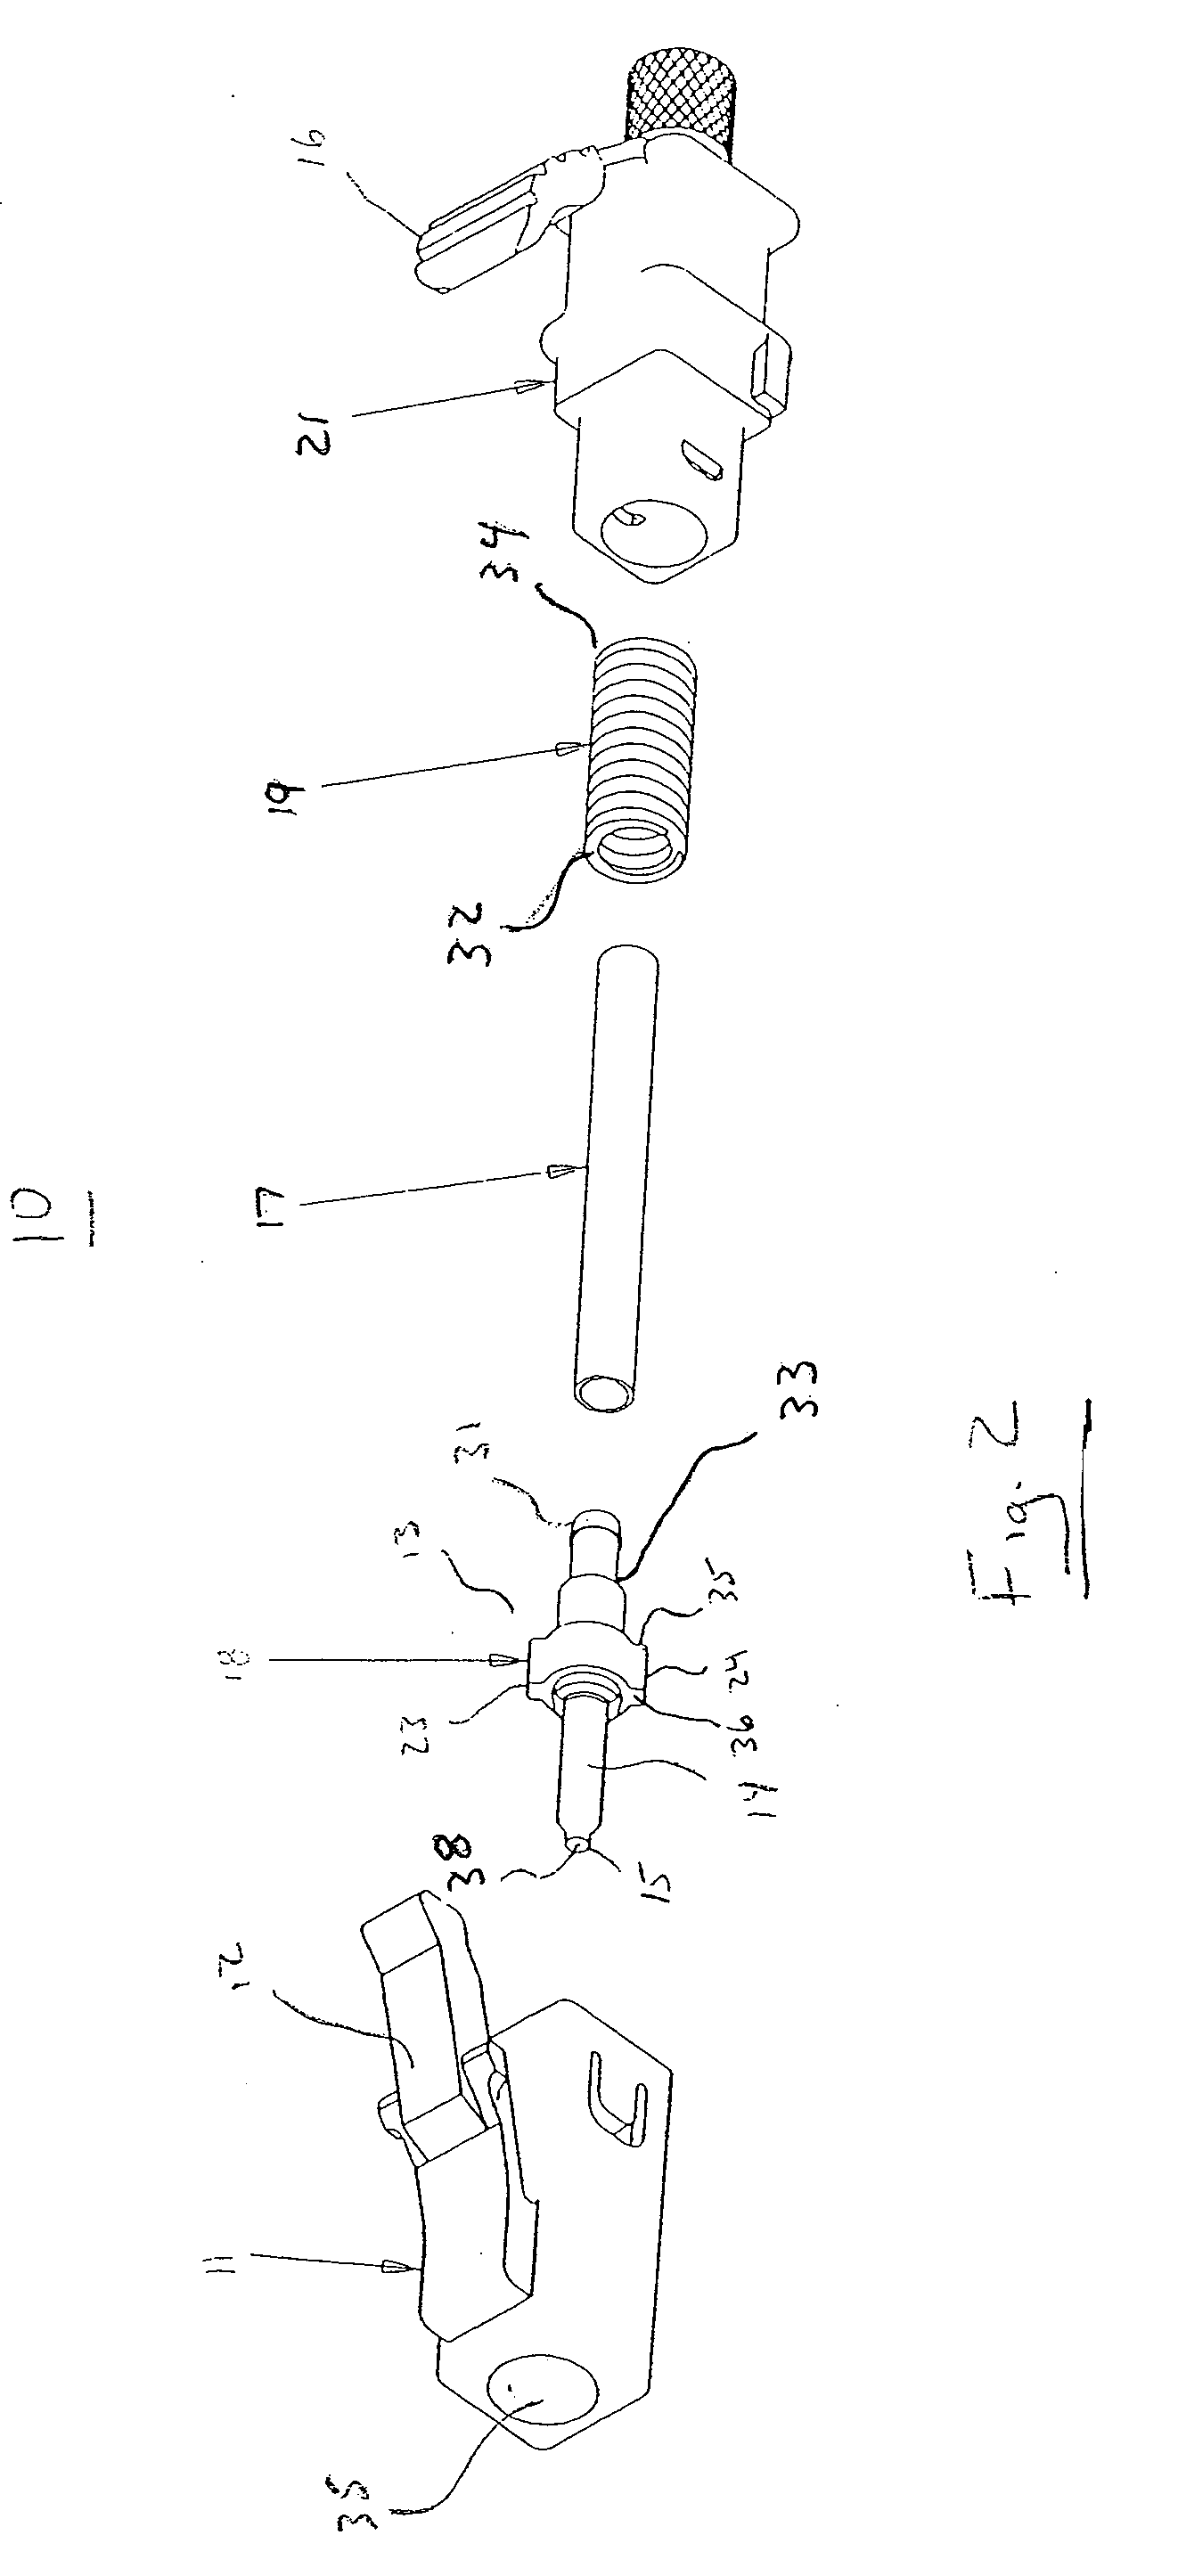 Optical fiber connector with ferrule radial orientation control